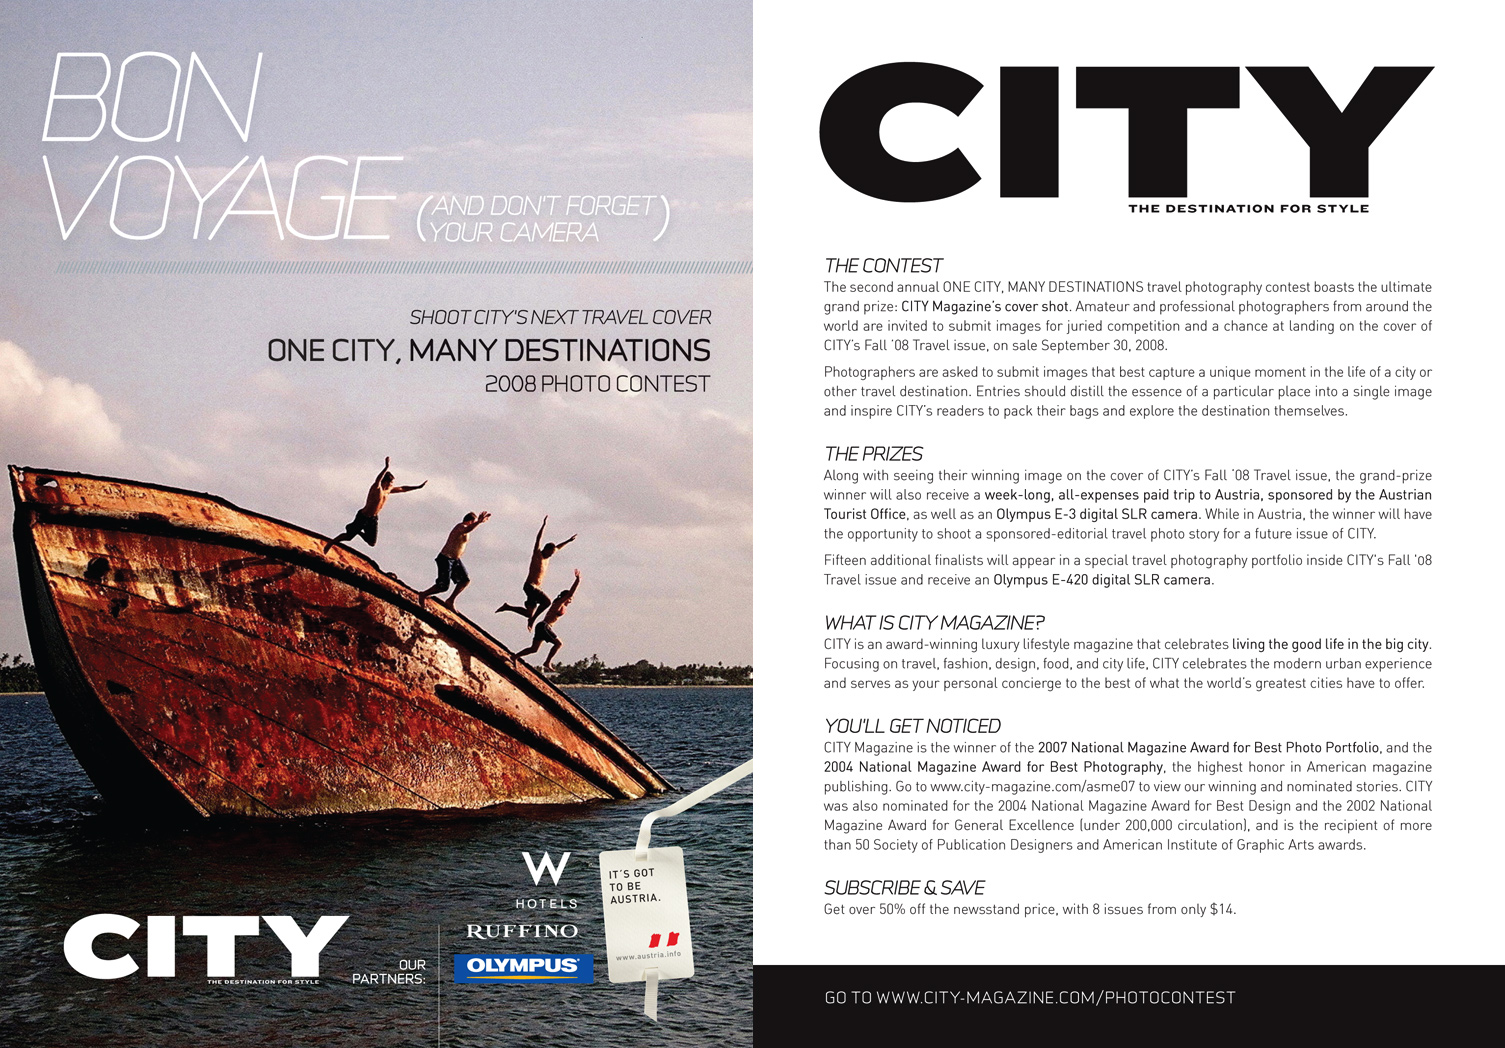  One City, Many Destinations photo contest 5 x 7" promotional postcard. 2007. 